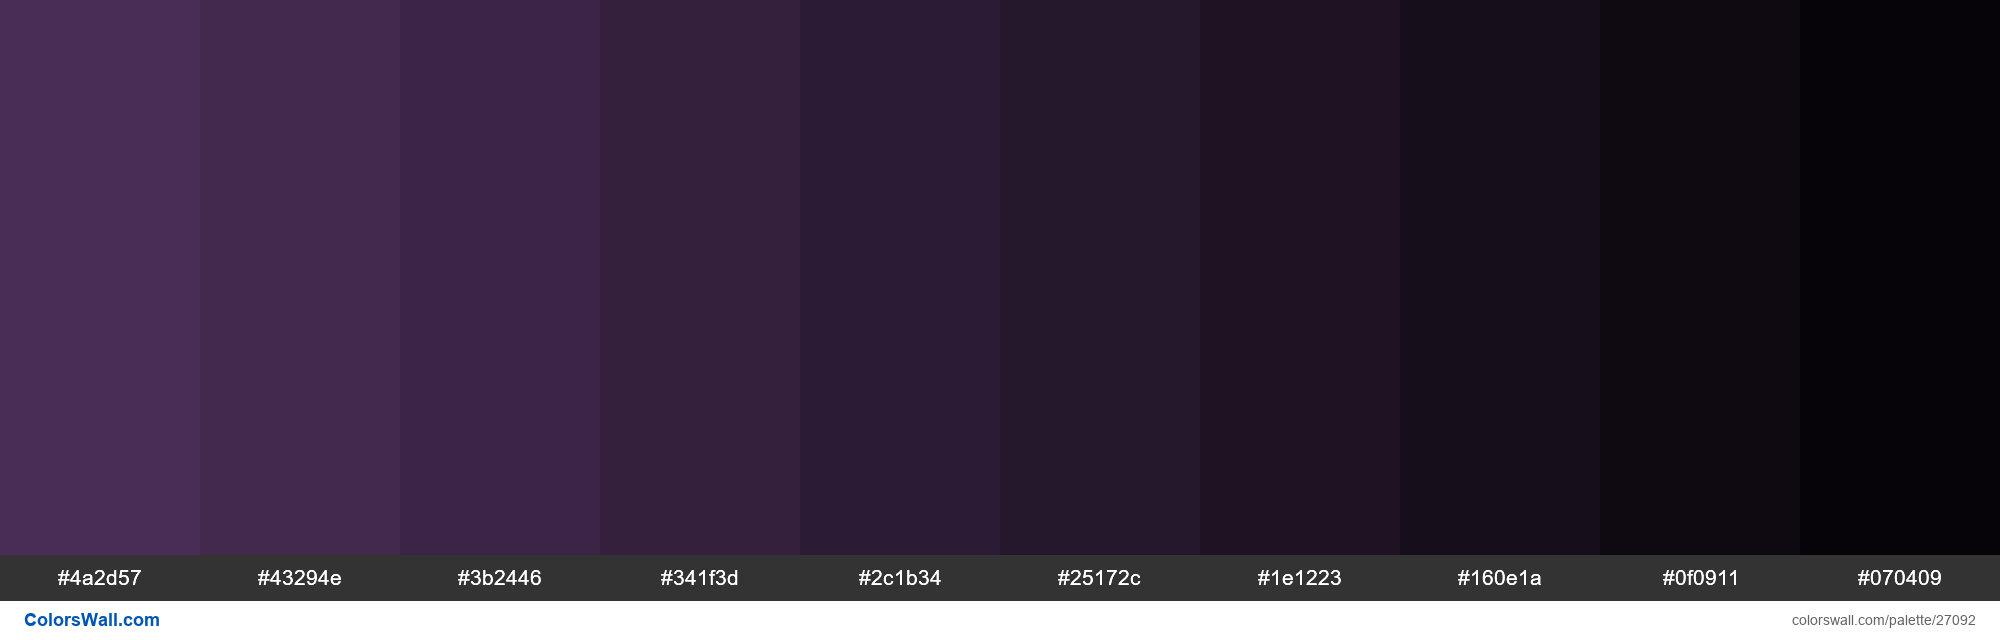 colorswall on X: Shades X11 color Dark Magenta #8B008B hex #7d007d,  #6f006f, #610061, #530053, #460046, #380038, #2a002a, #1c001c, #0e000e,  #000000 #colors #palette   /  X